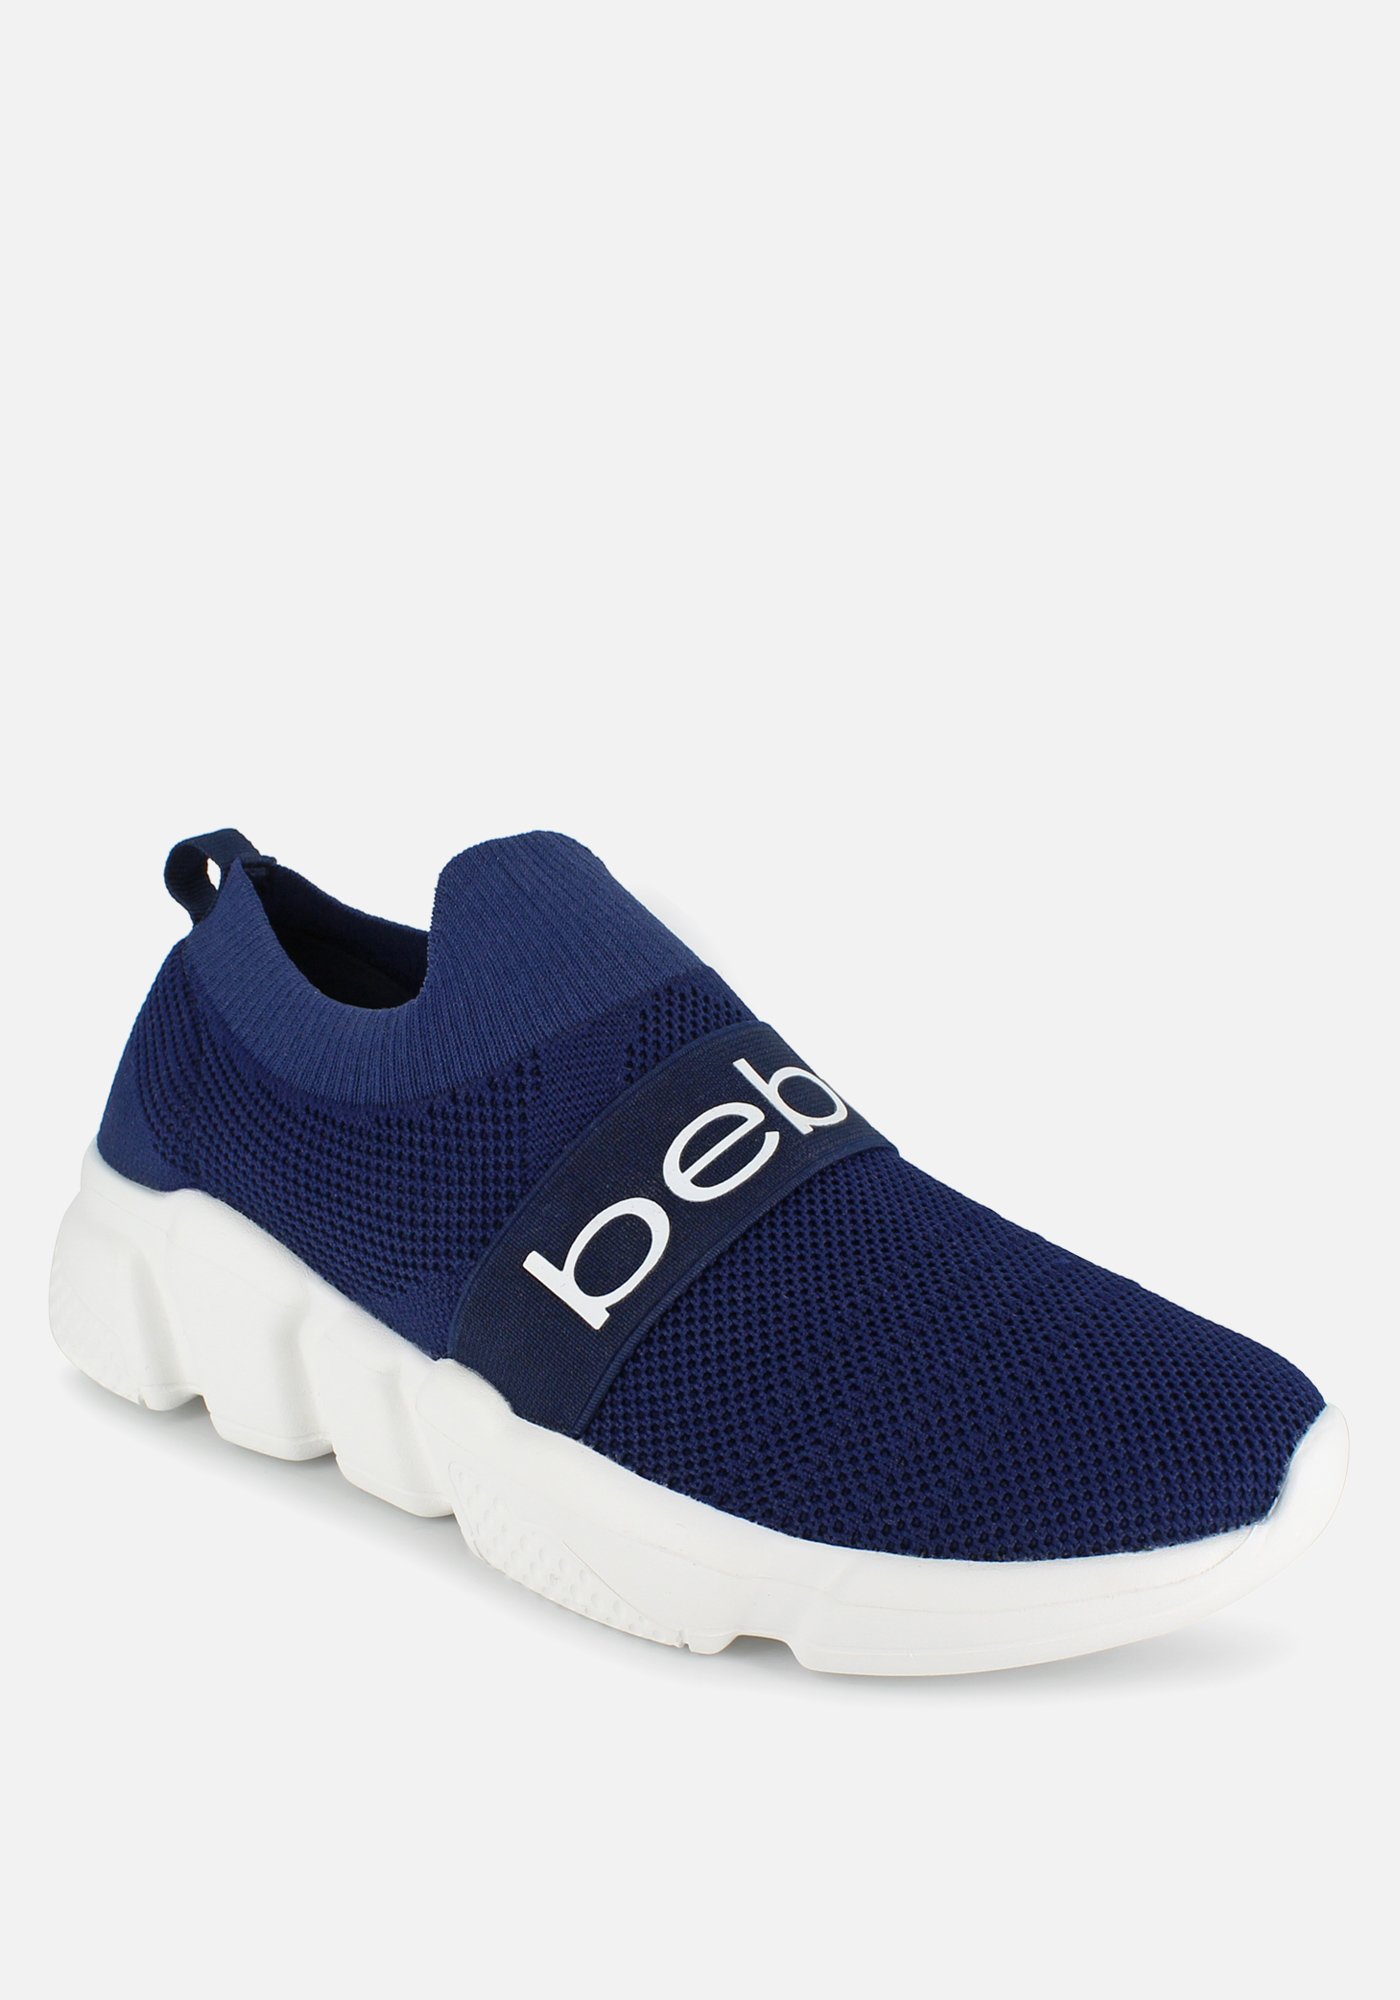 Bebe Women's Aindrea Platform Sneakers, Size 9 in Navy Blue Synthetic